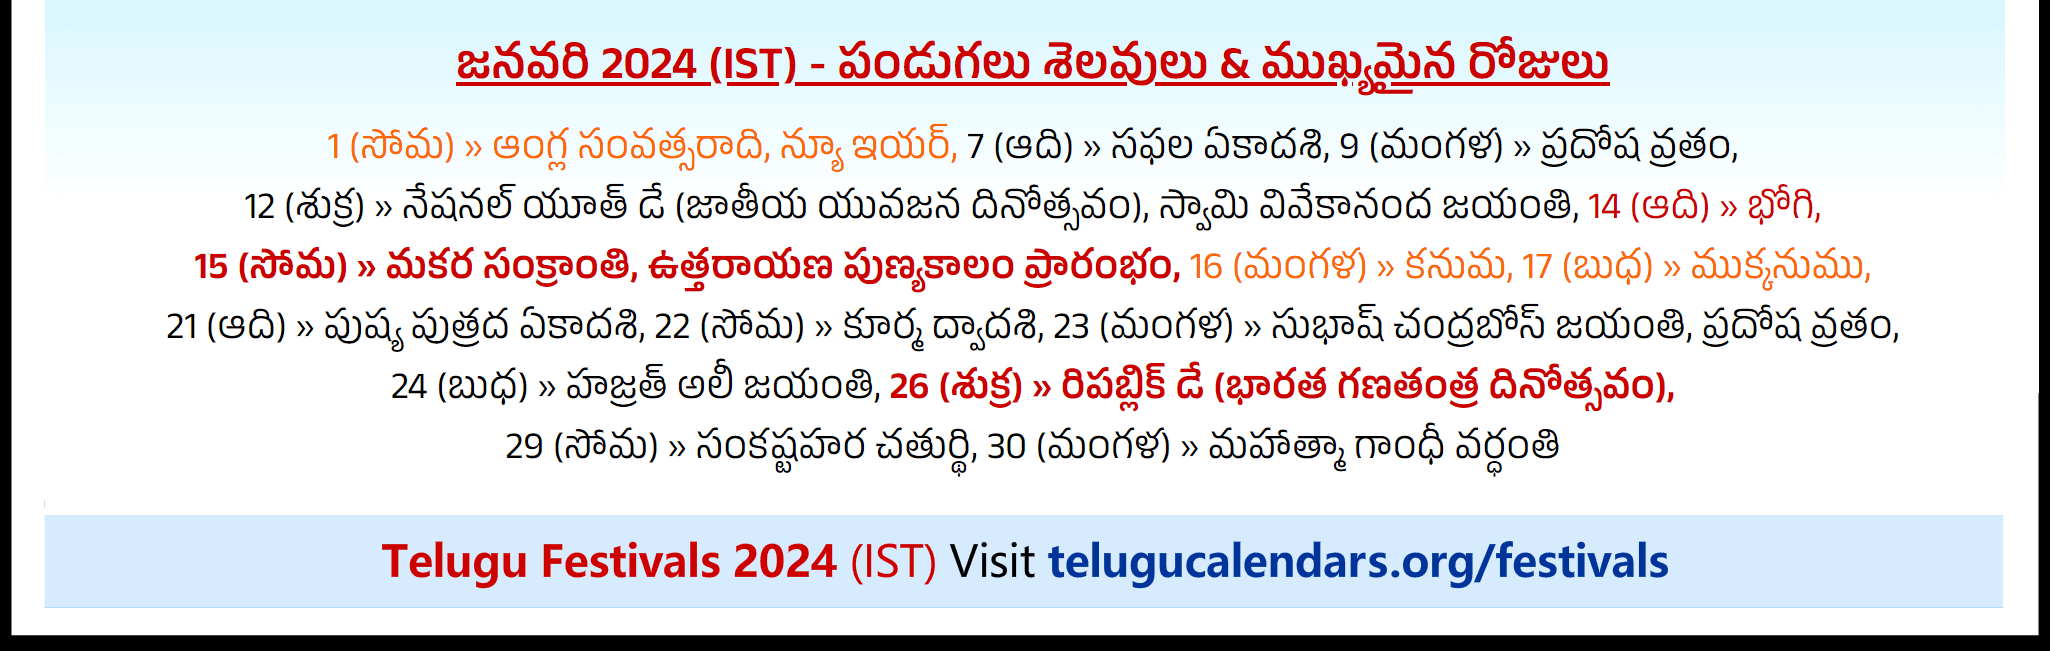 Telugu Festivals 2024 January Toronto